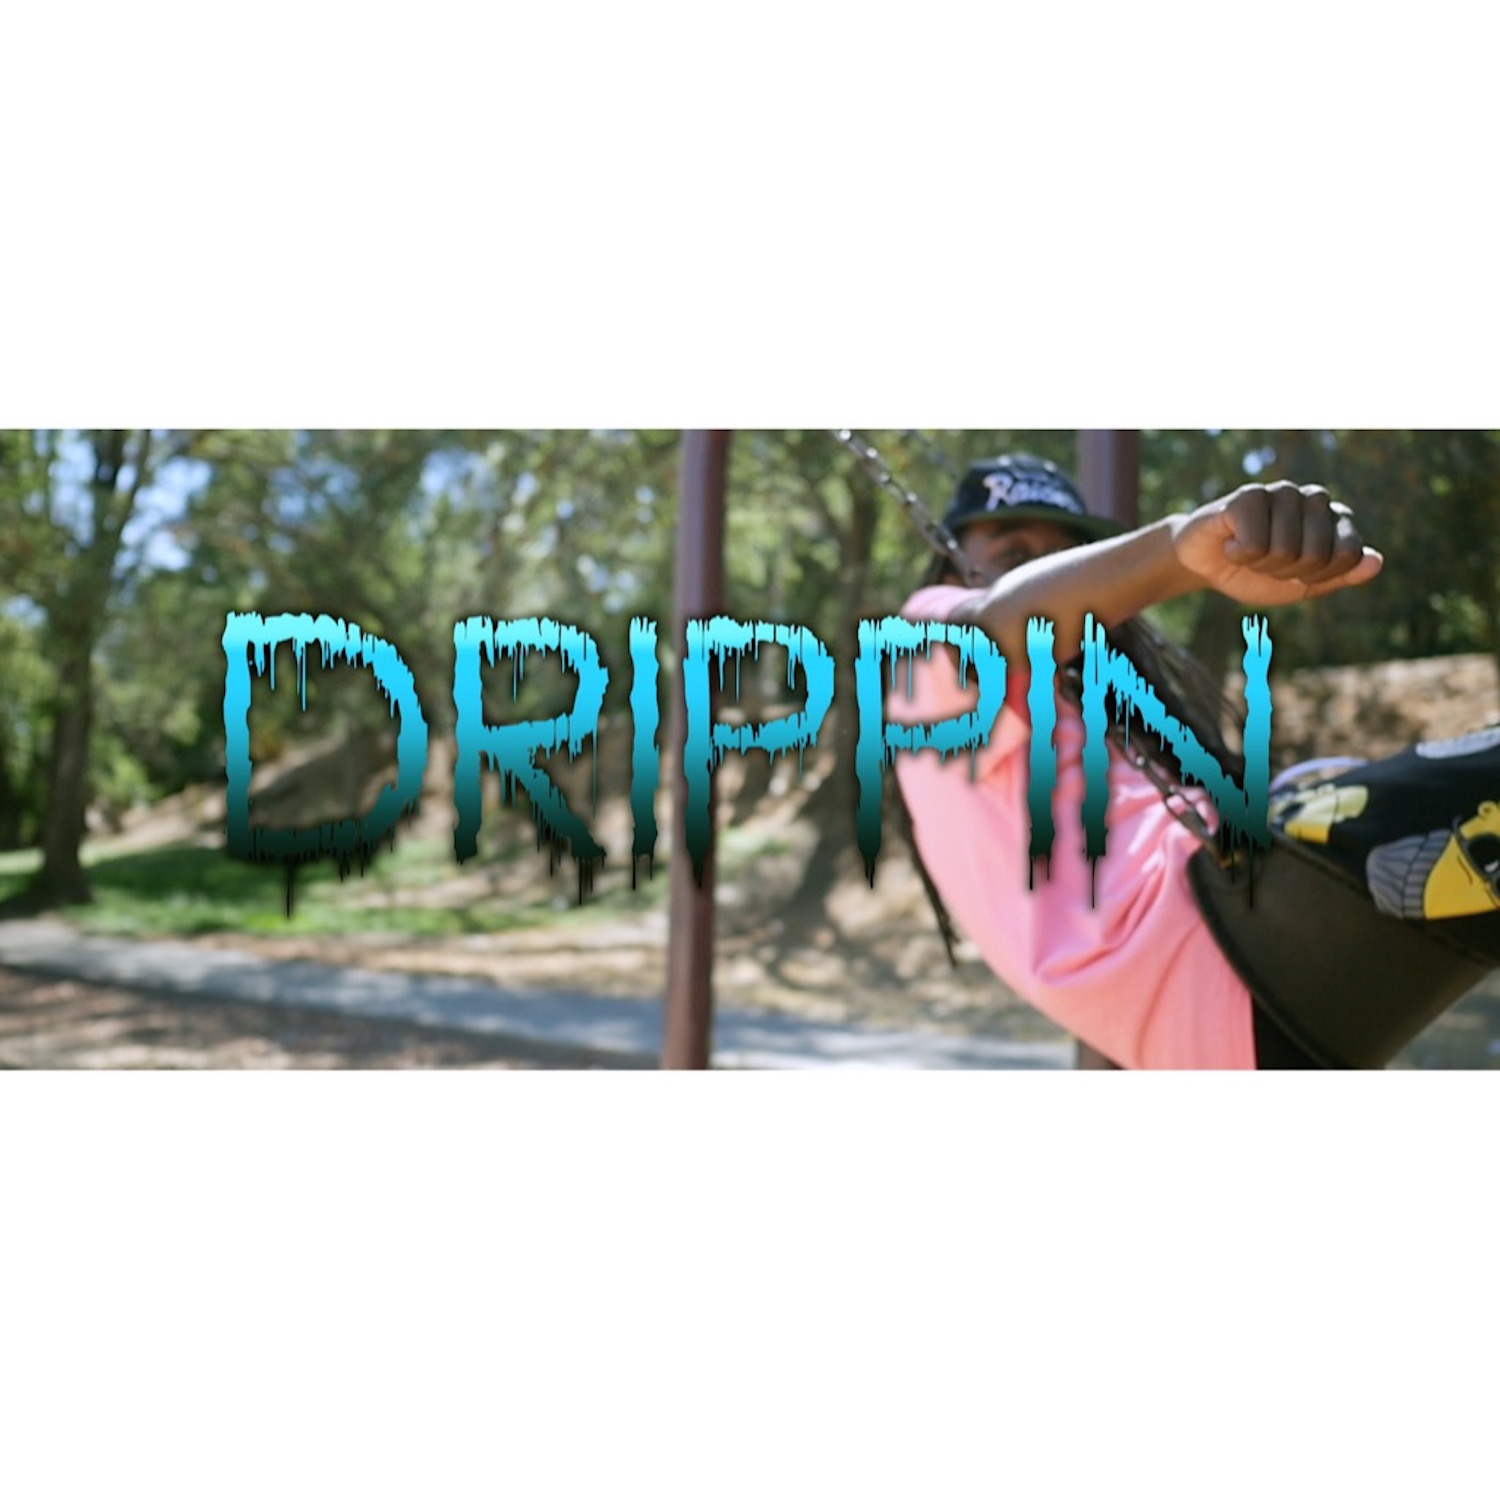 Drippin